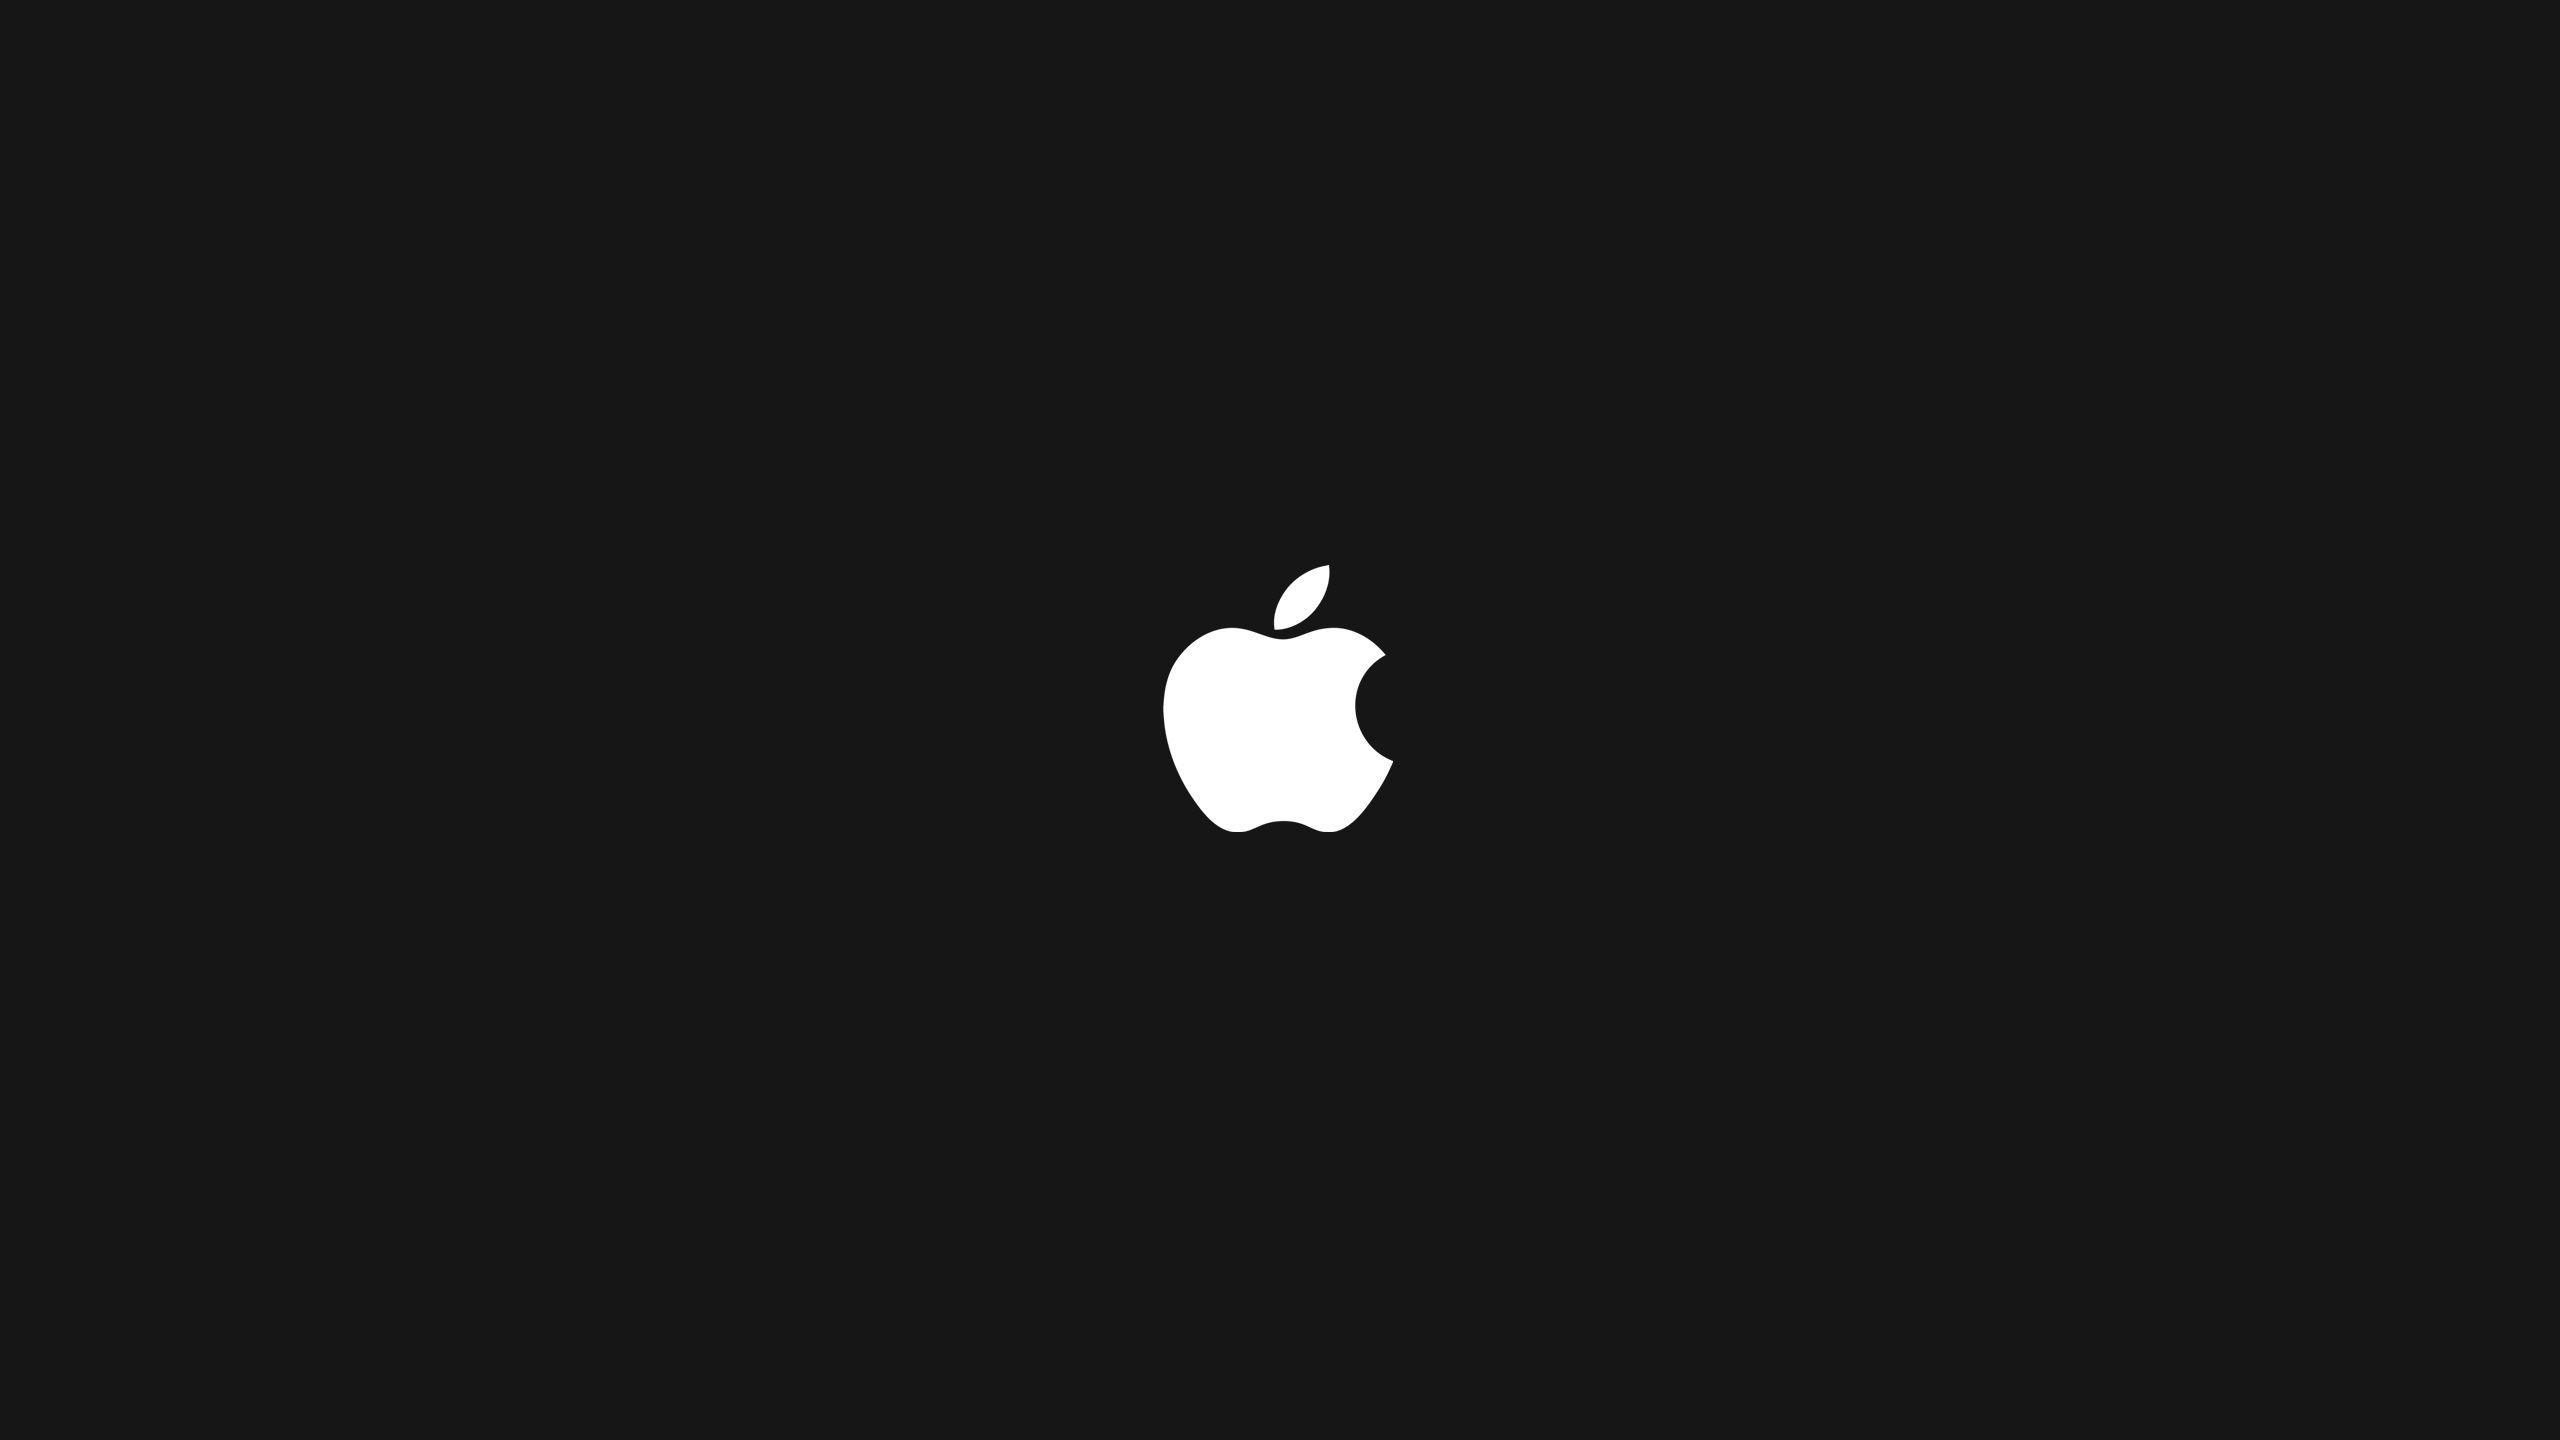 Download free Apple logo black background chất lượng cao